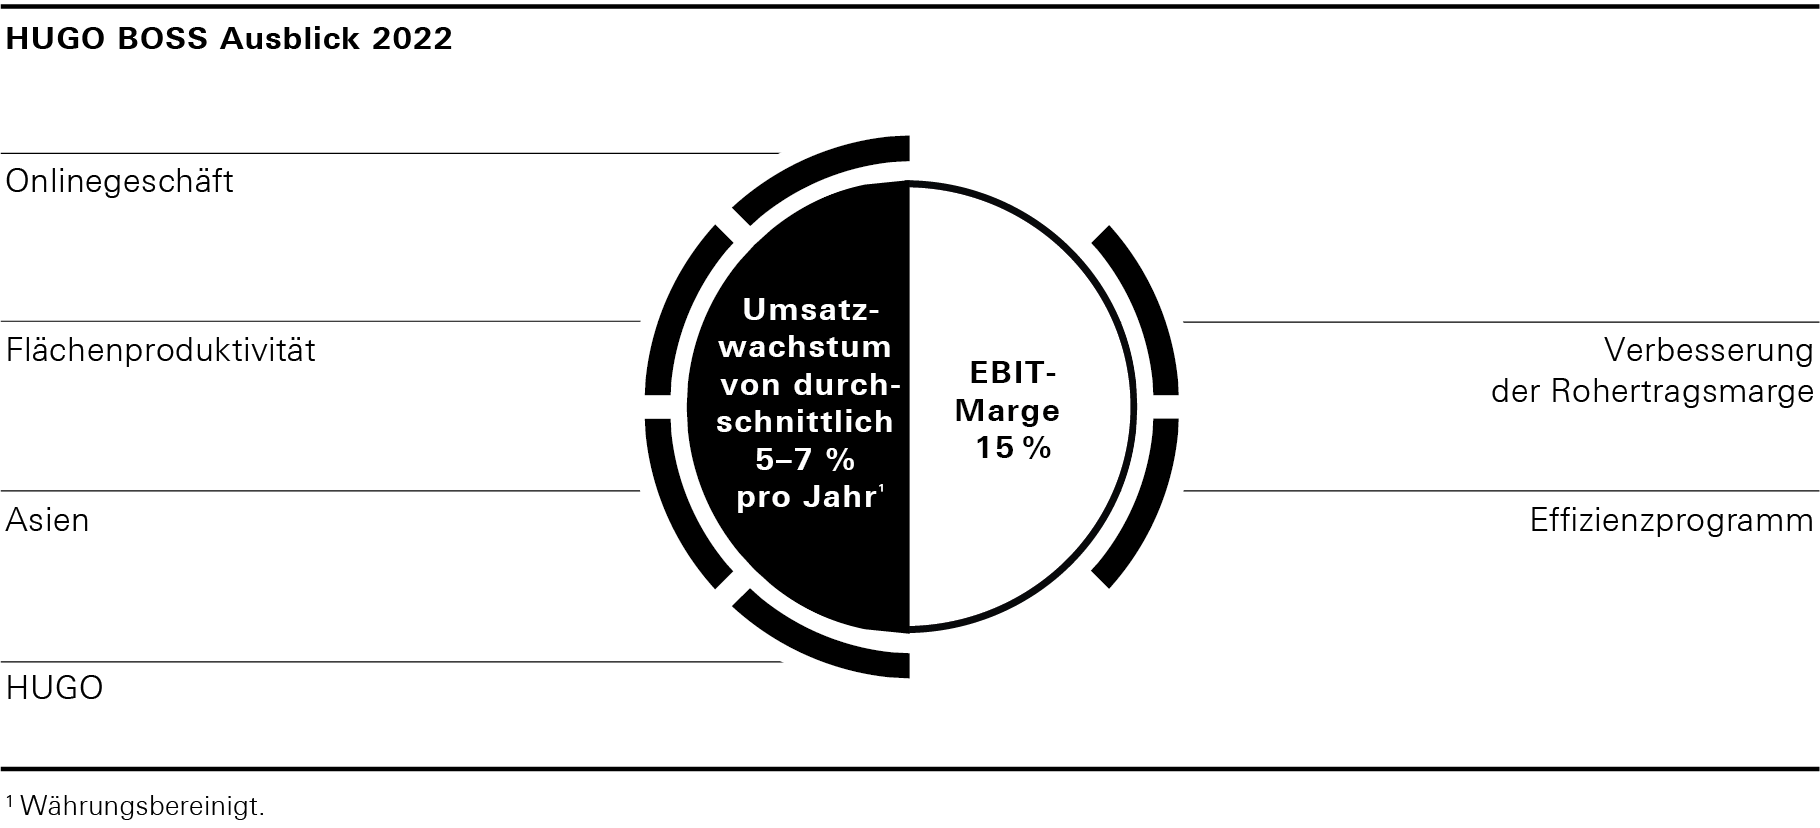 HUGO BOSS Ausblick 2022 (Grafik)